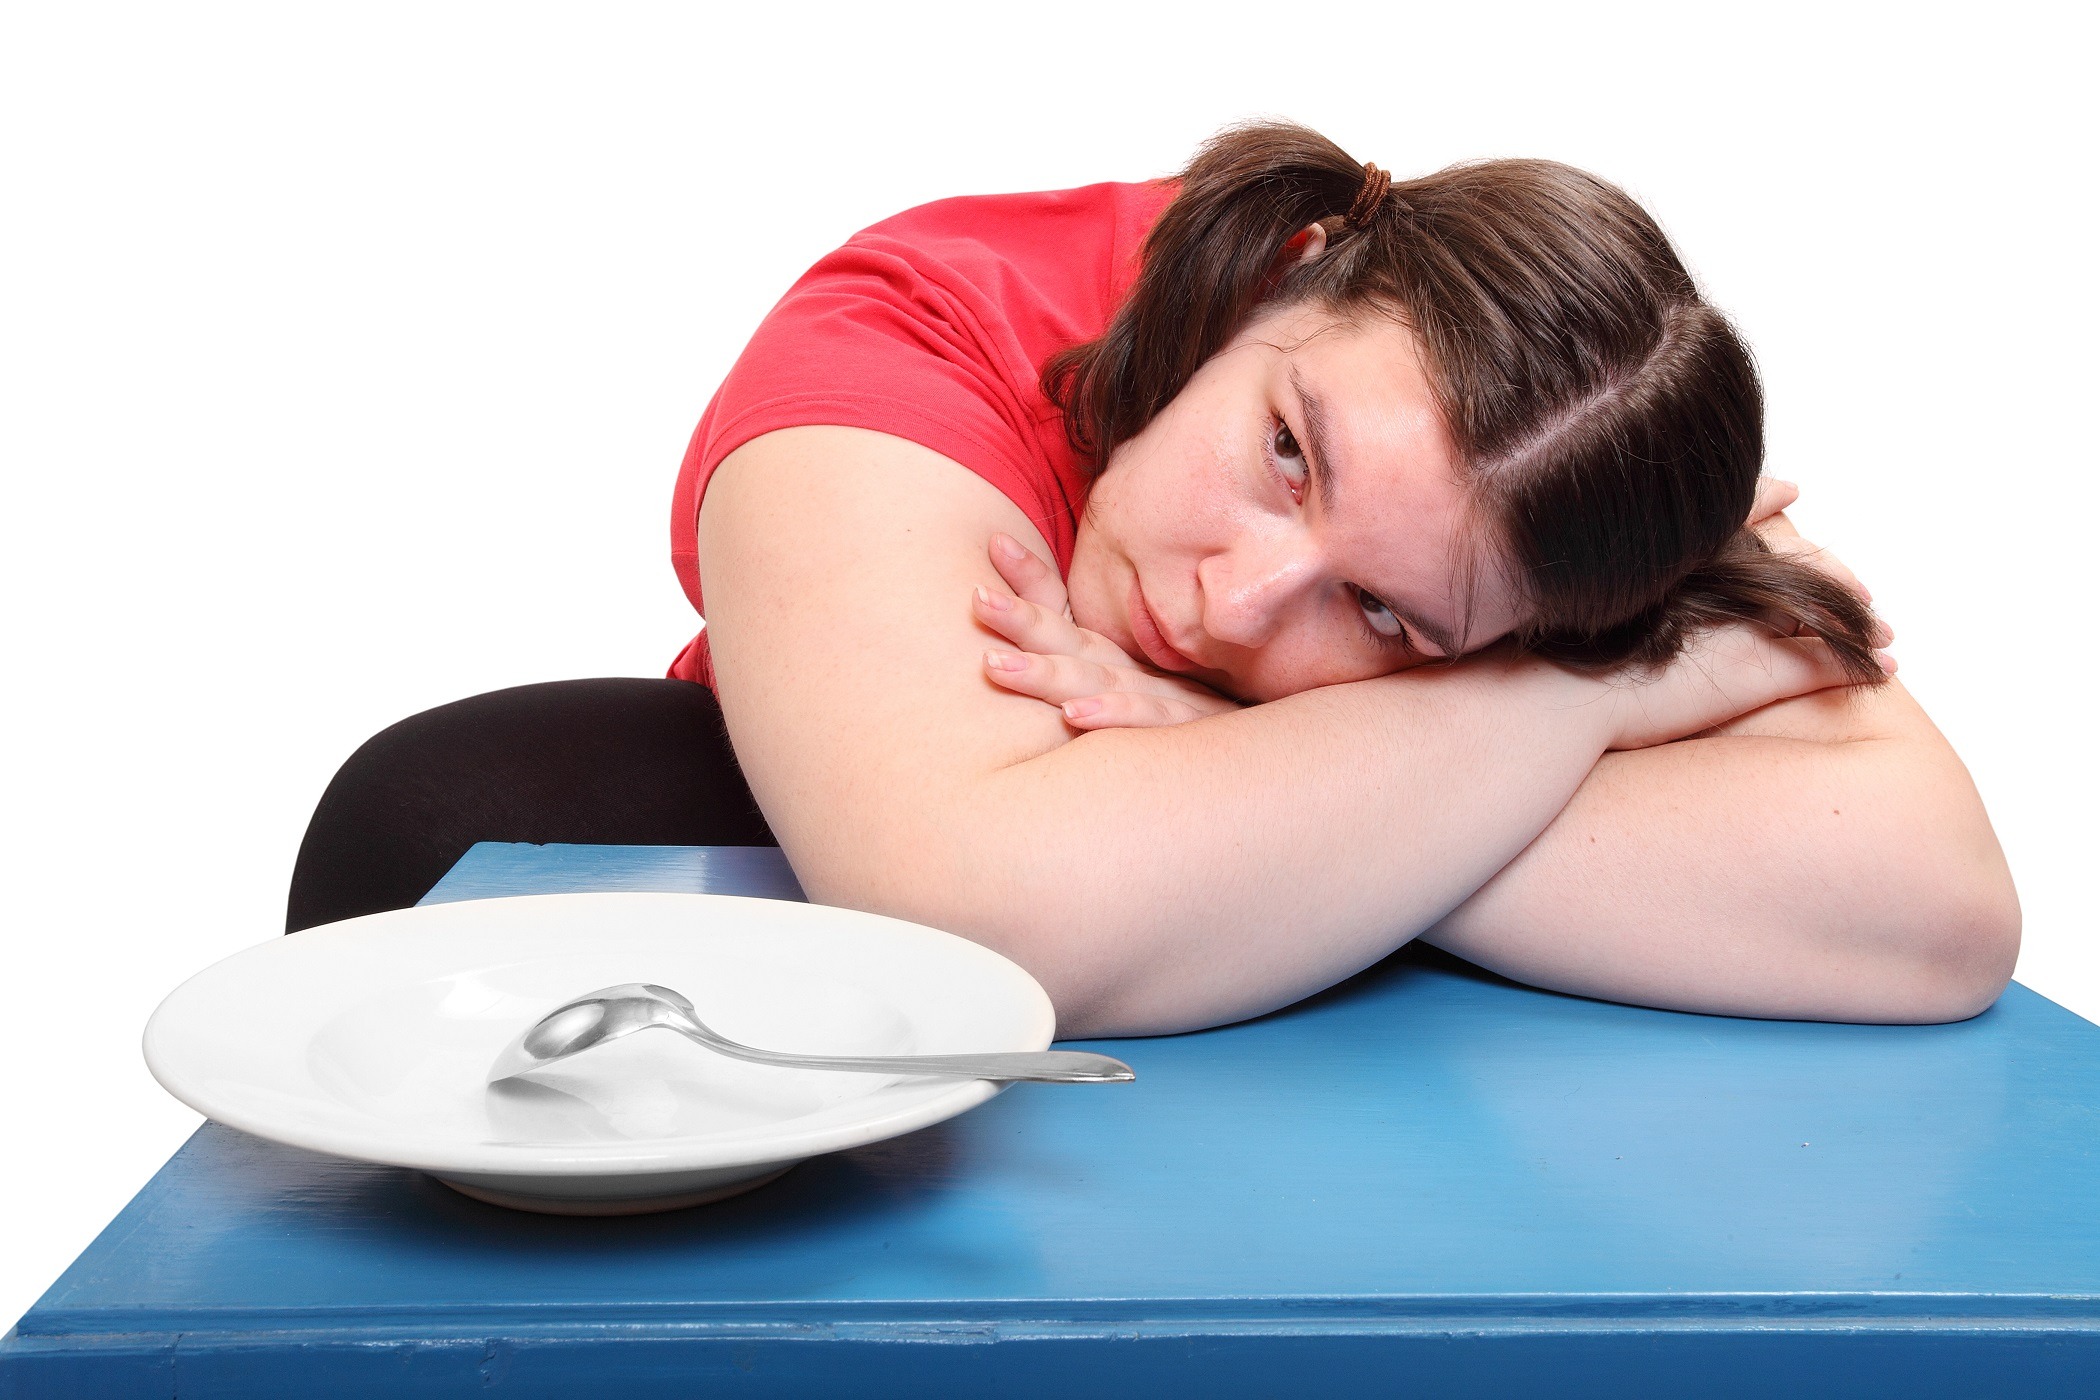 Riscurile dietelor draconice – ce se intampla cand slabesti mult si repede?